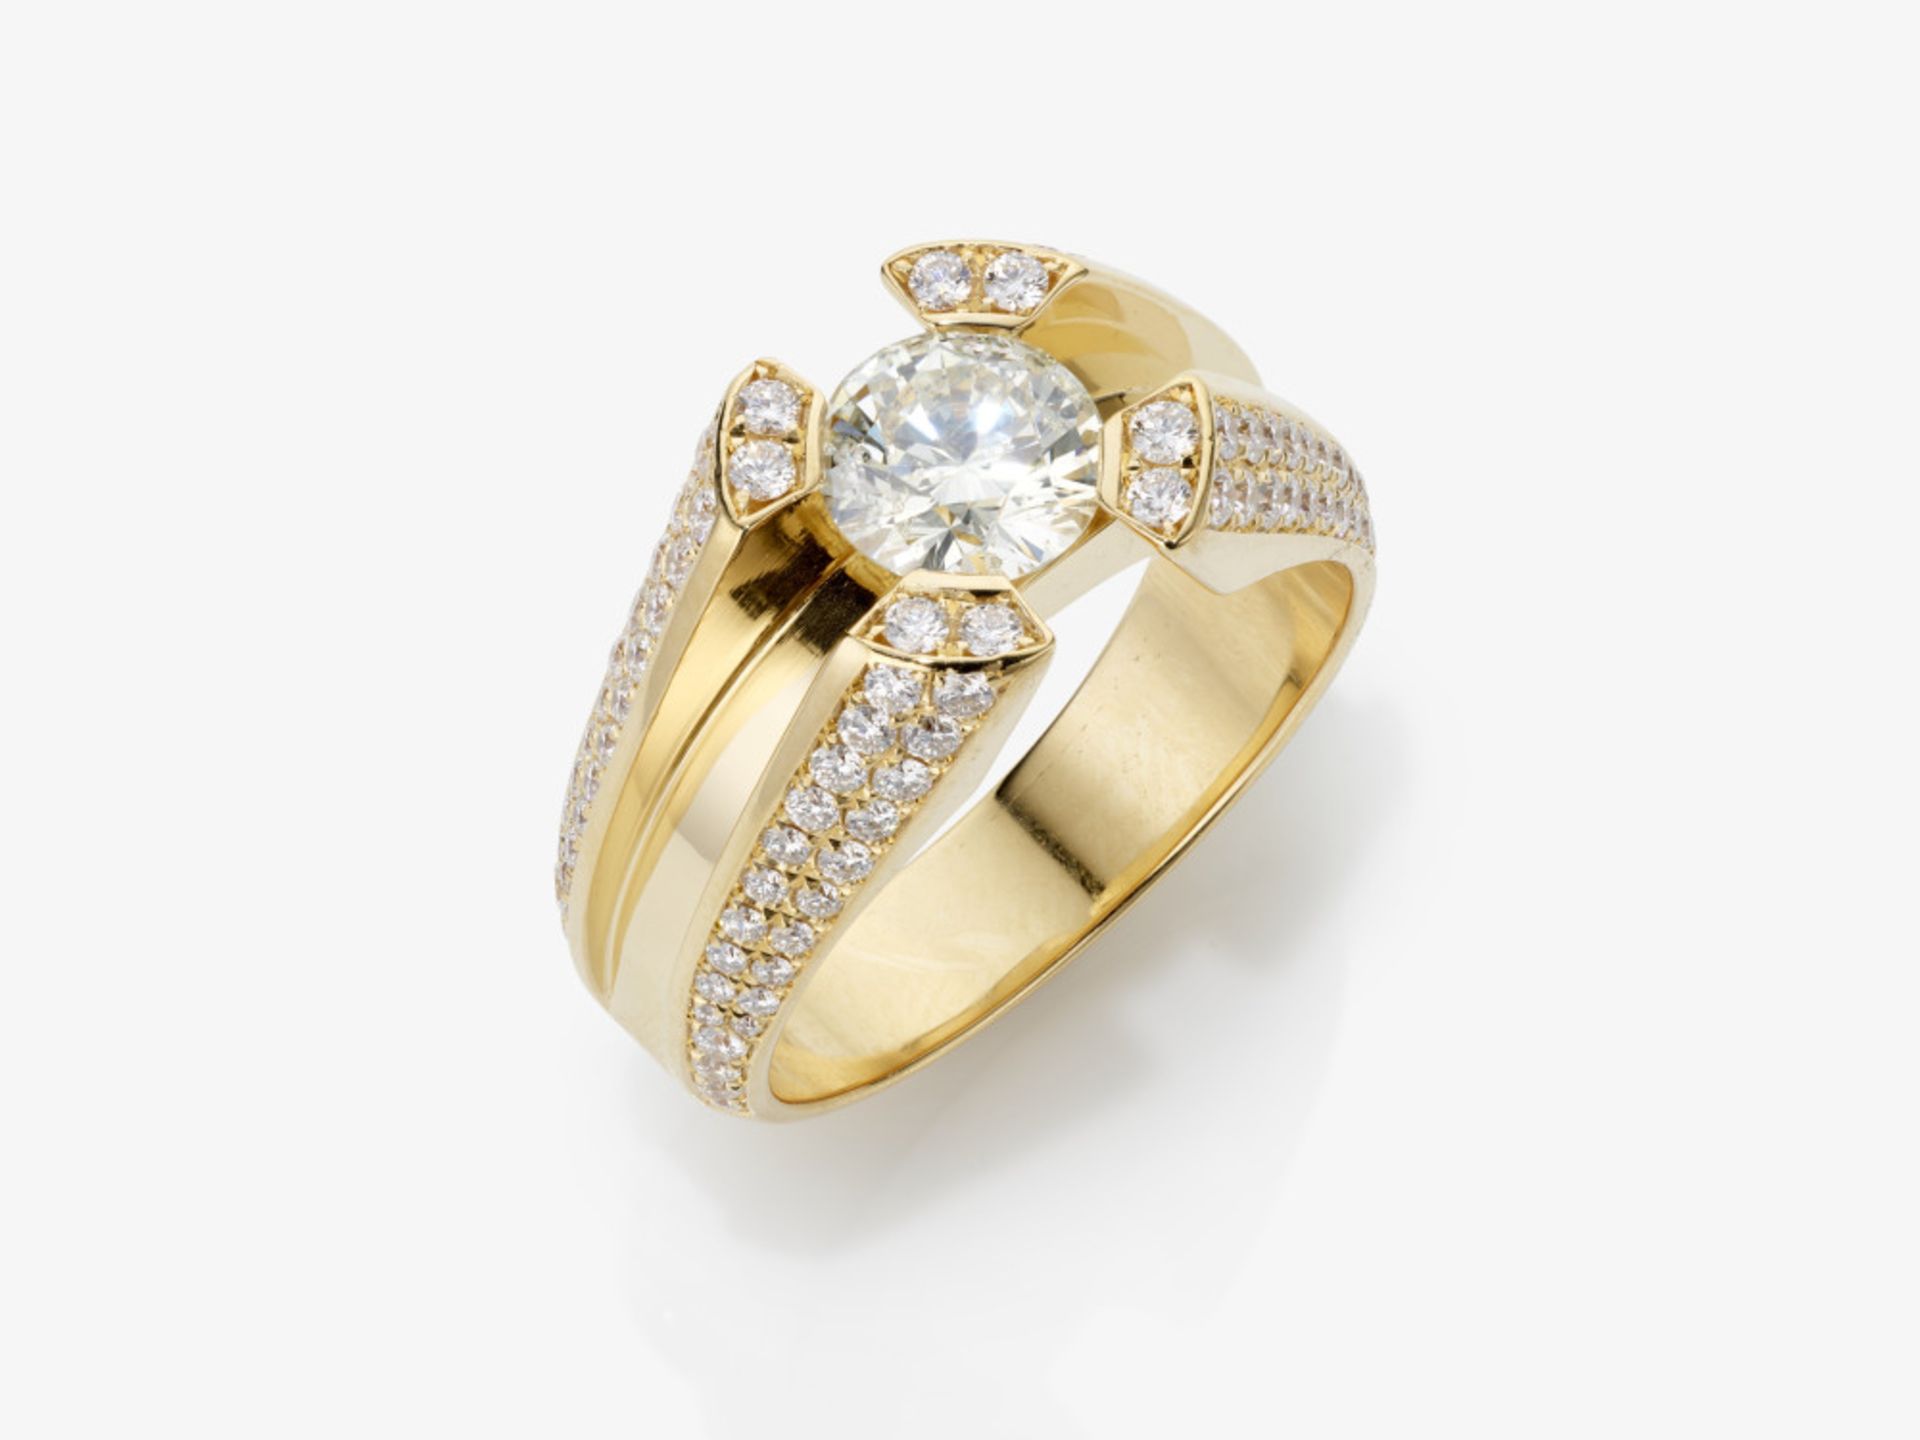 A gentlemens ring with brilliant-cut diamonds - Belgium, ANTWERP ATELIERS